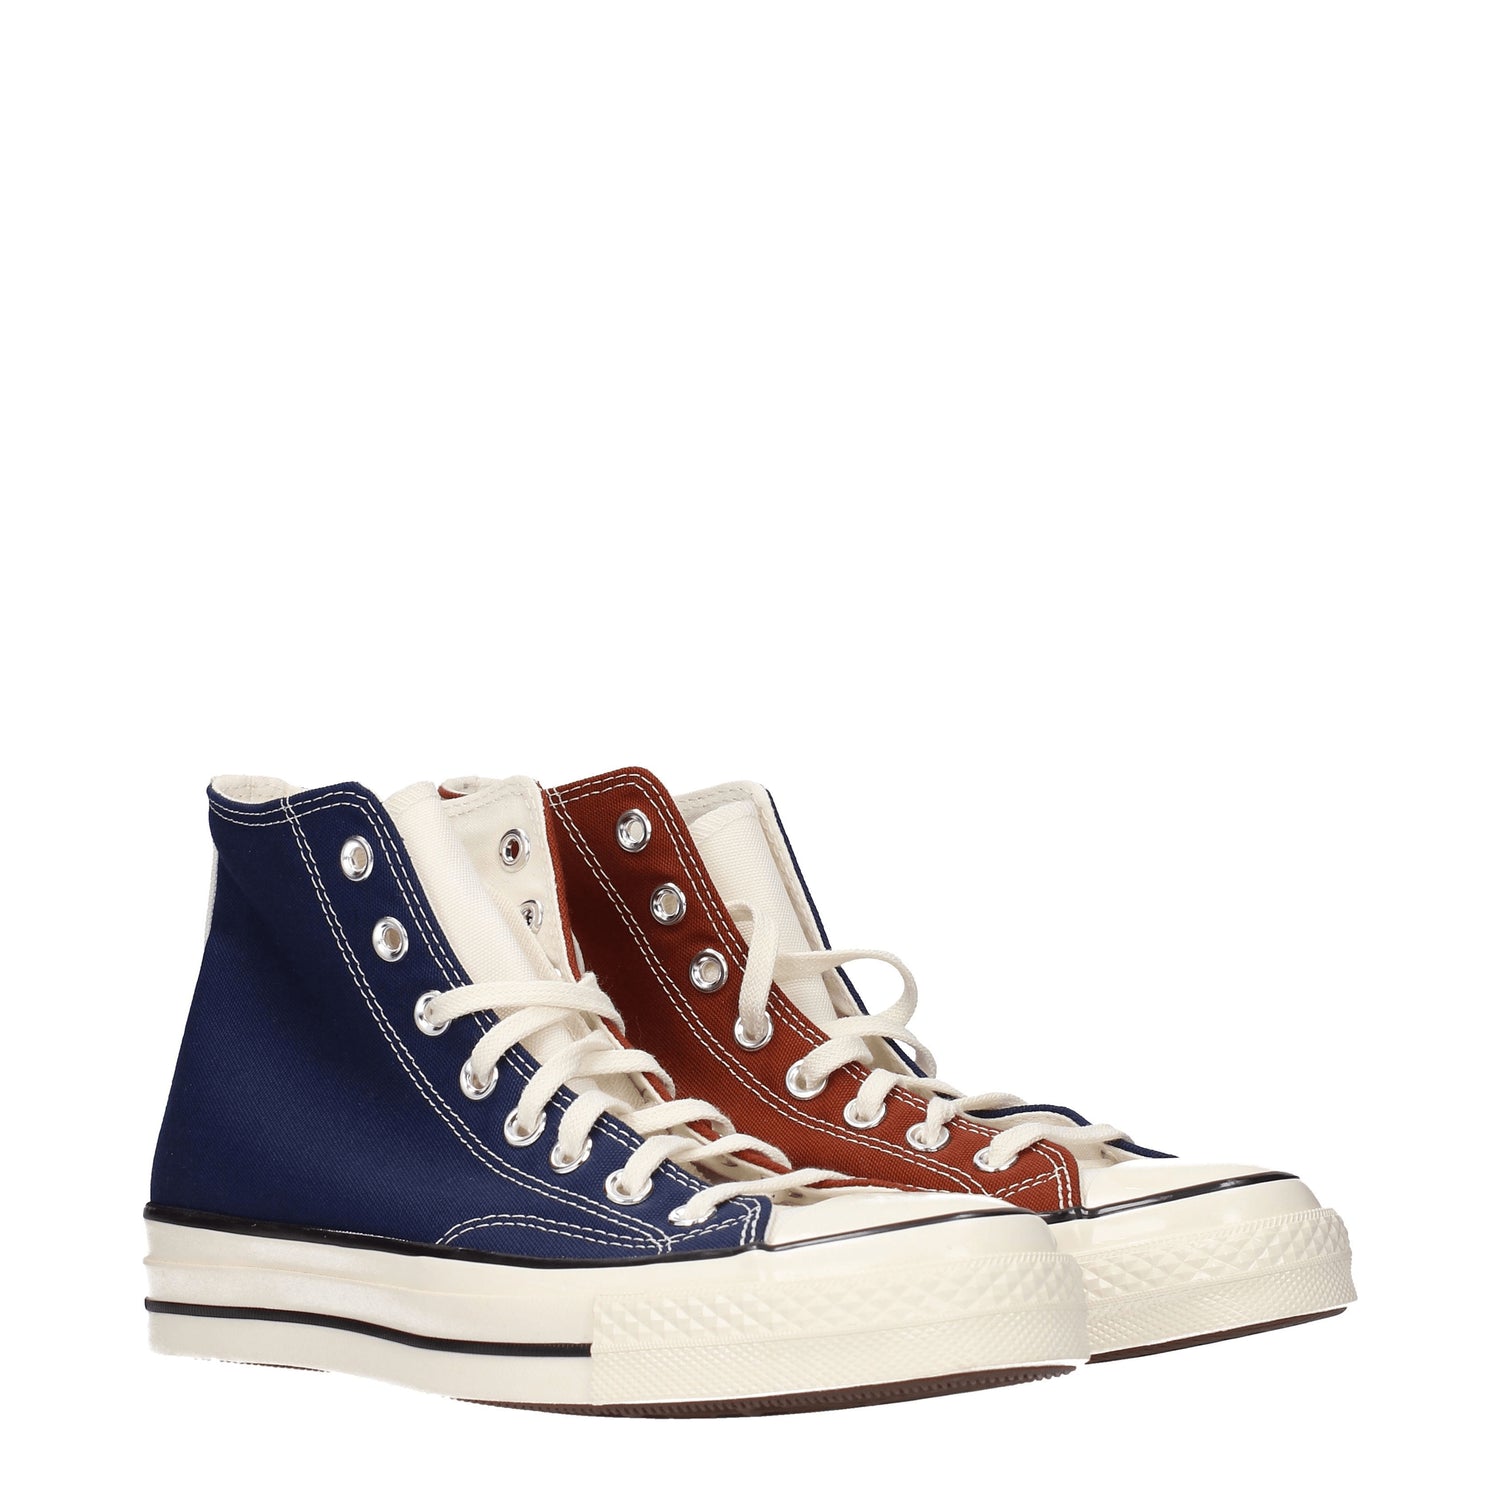 Converse Sneakers Uomo Tessuto Blu Marrone